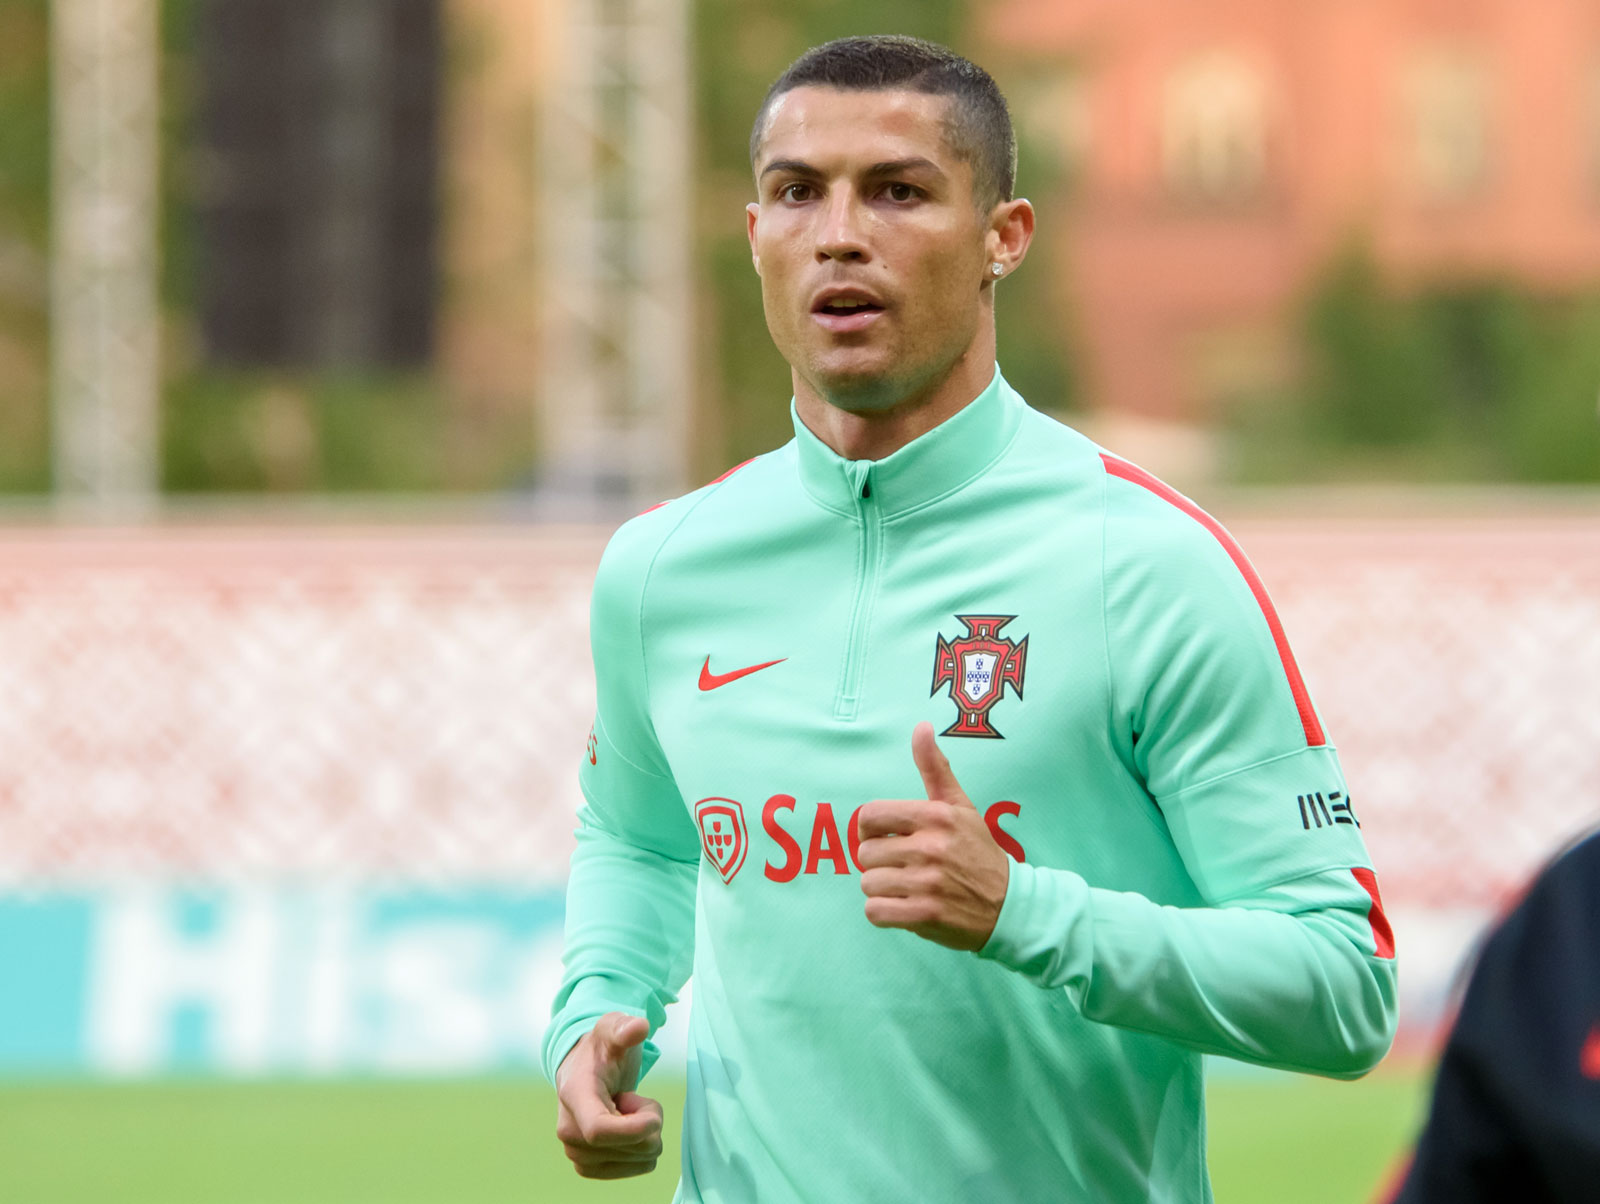 Man U reach agreement to re-sign Cristiano Ronaldo